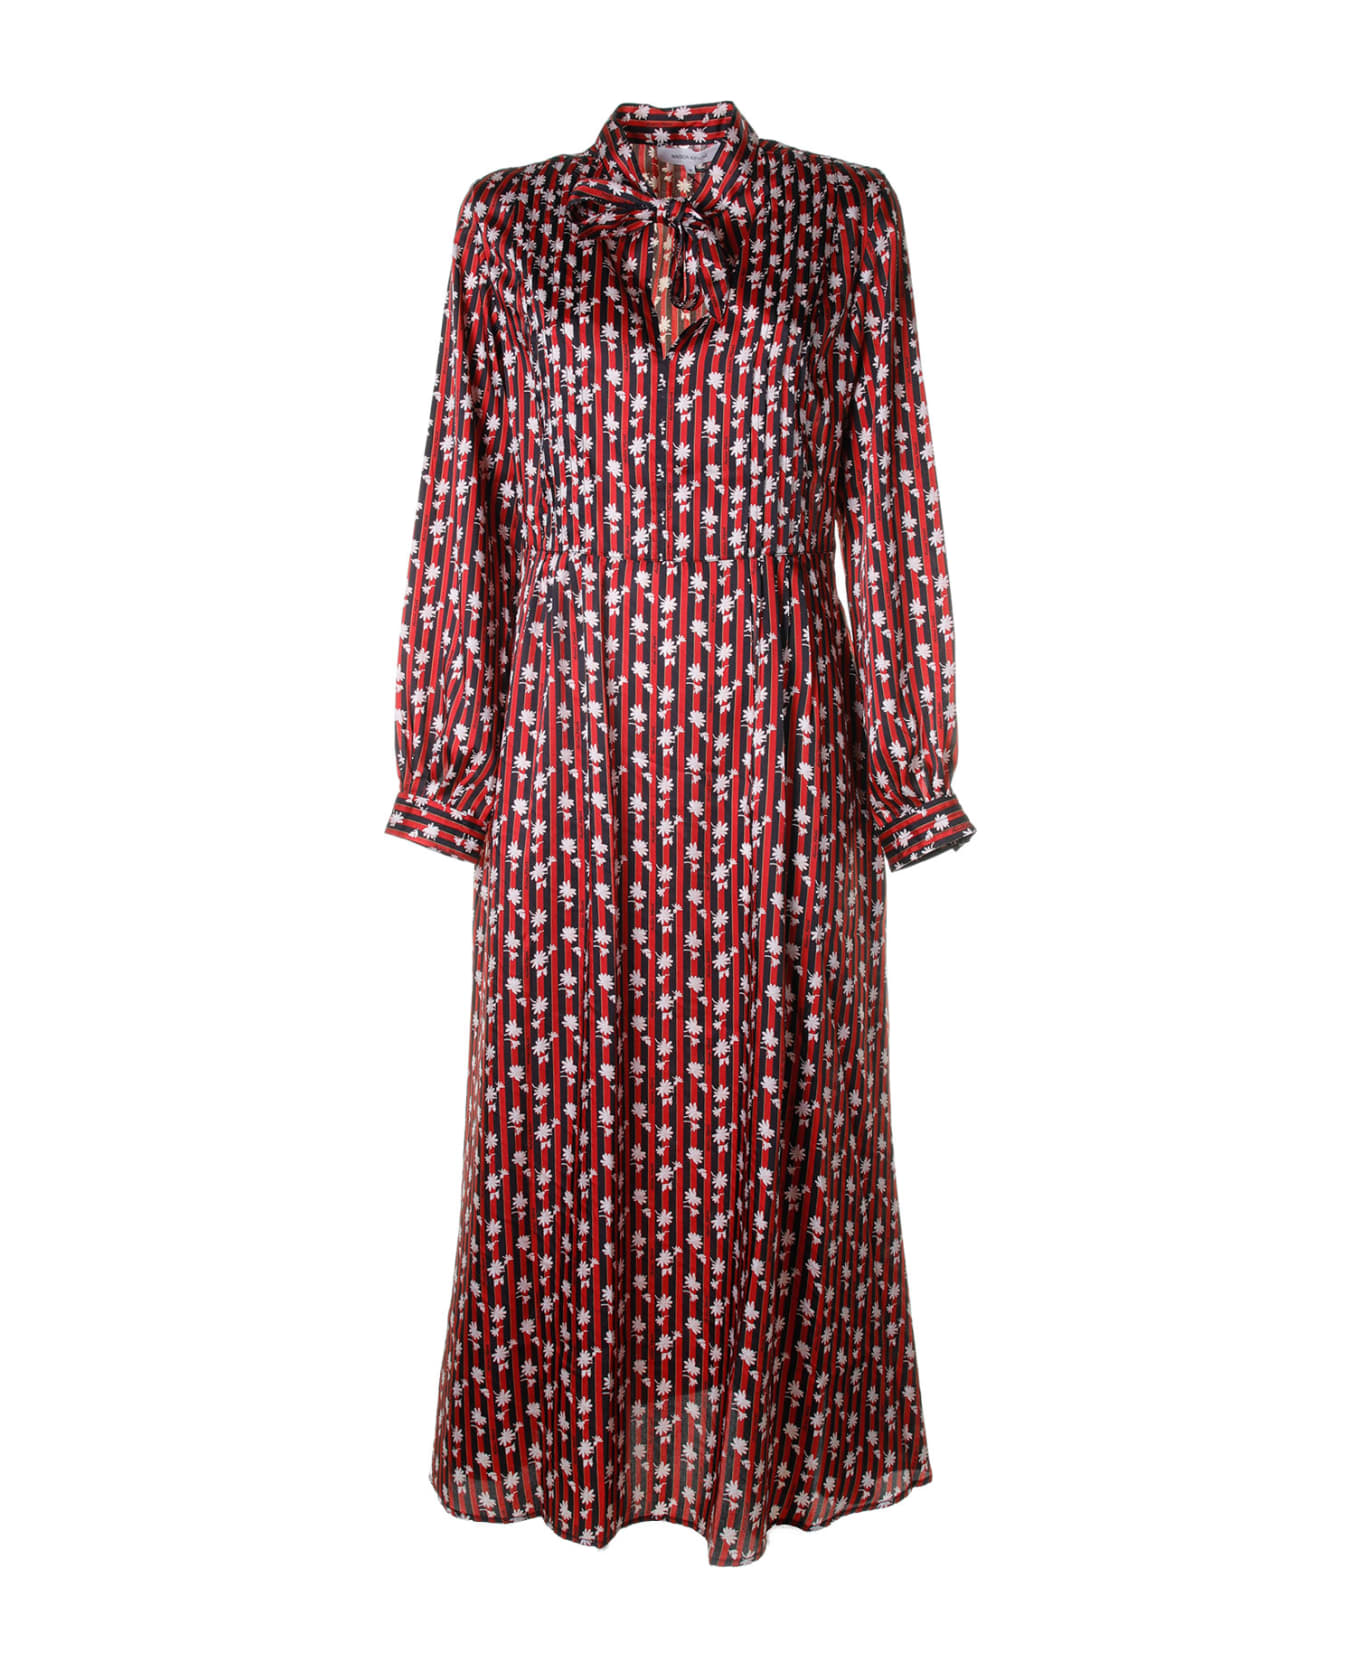 Maison Kitsuné Dress - PECAN BROWN CHERRY FLORAL COLL